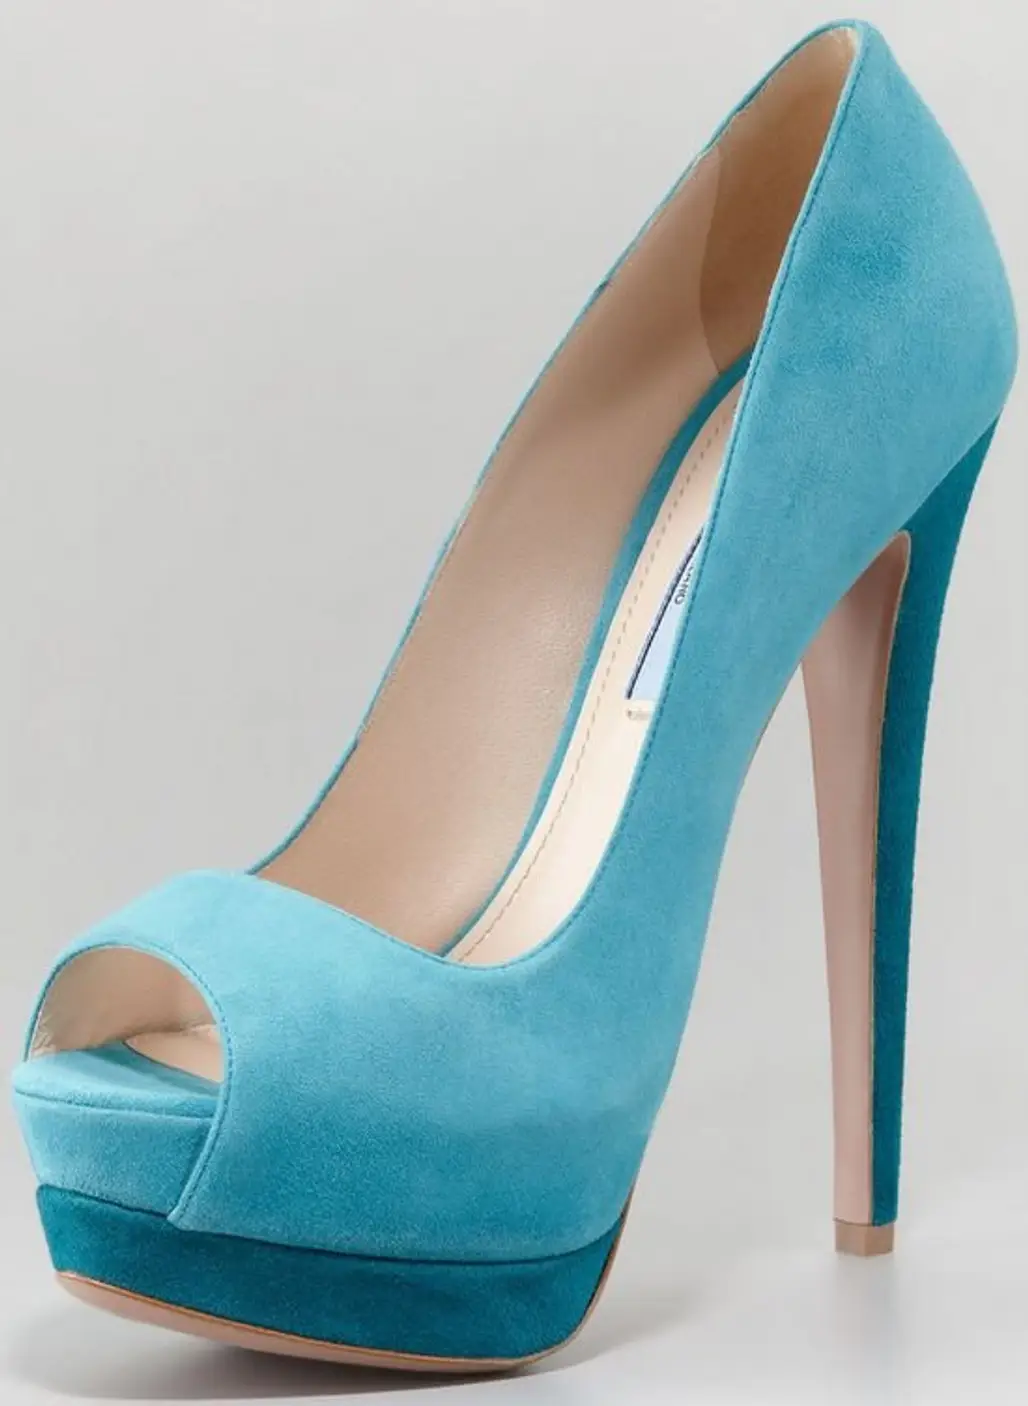 high heeled footwear,footwear,blue,turquoise,electric blue,